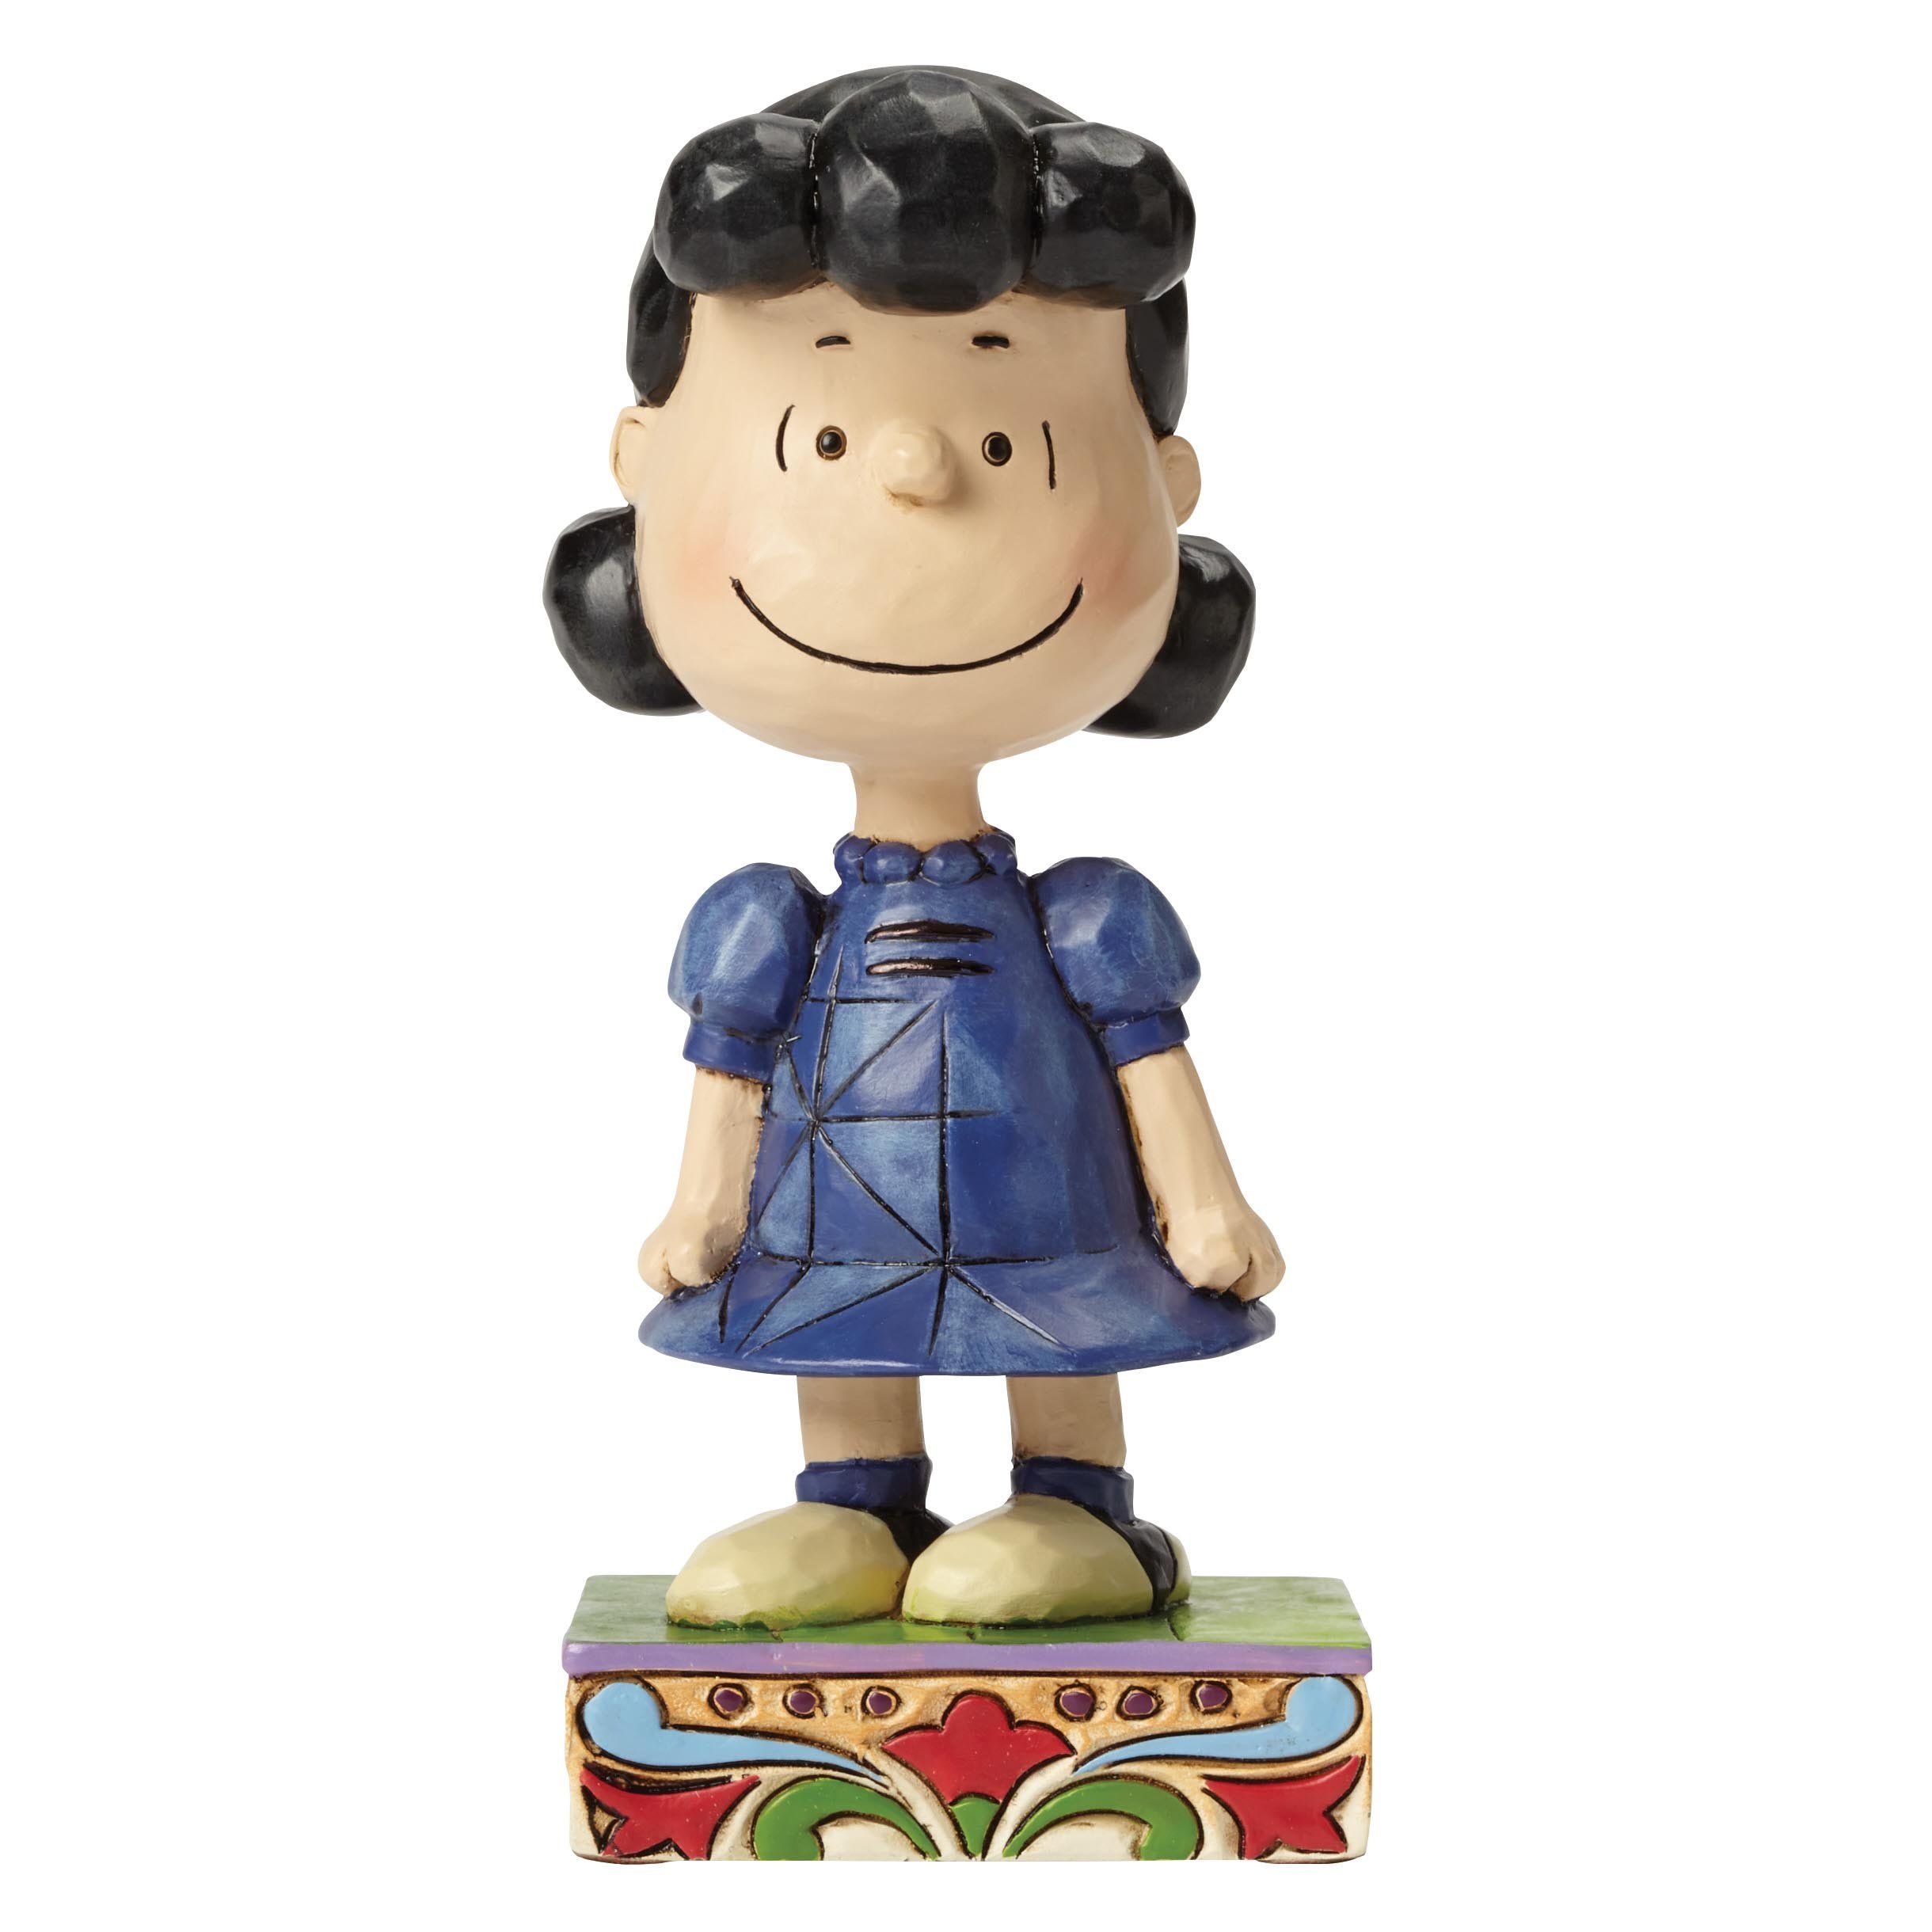 Enesco Jim Shore Peanuts Lucy Personality Pose Figurine, 4.75"